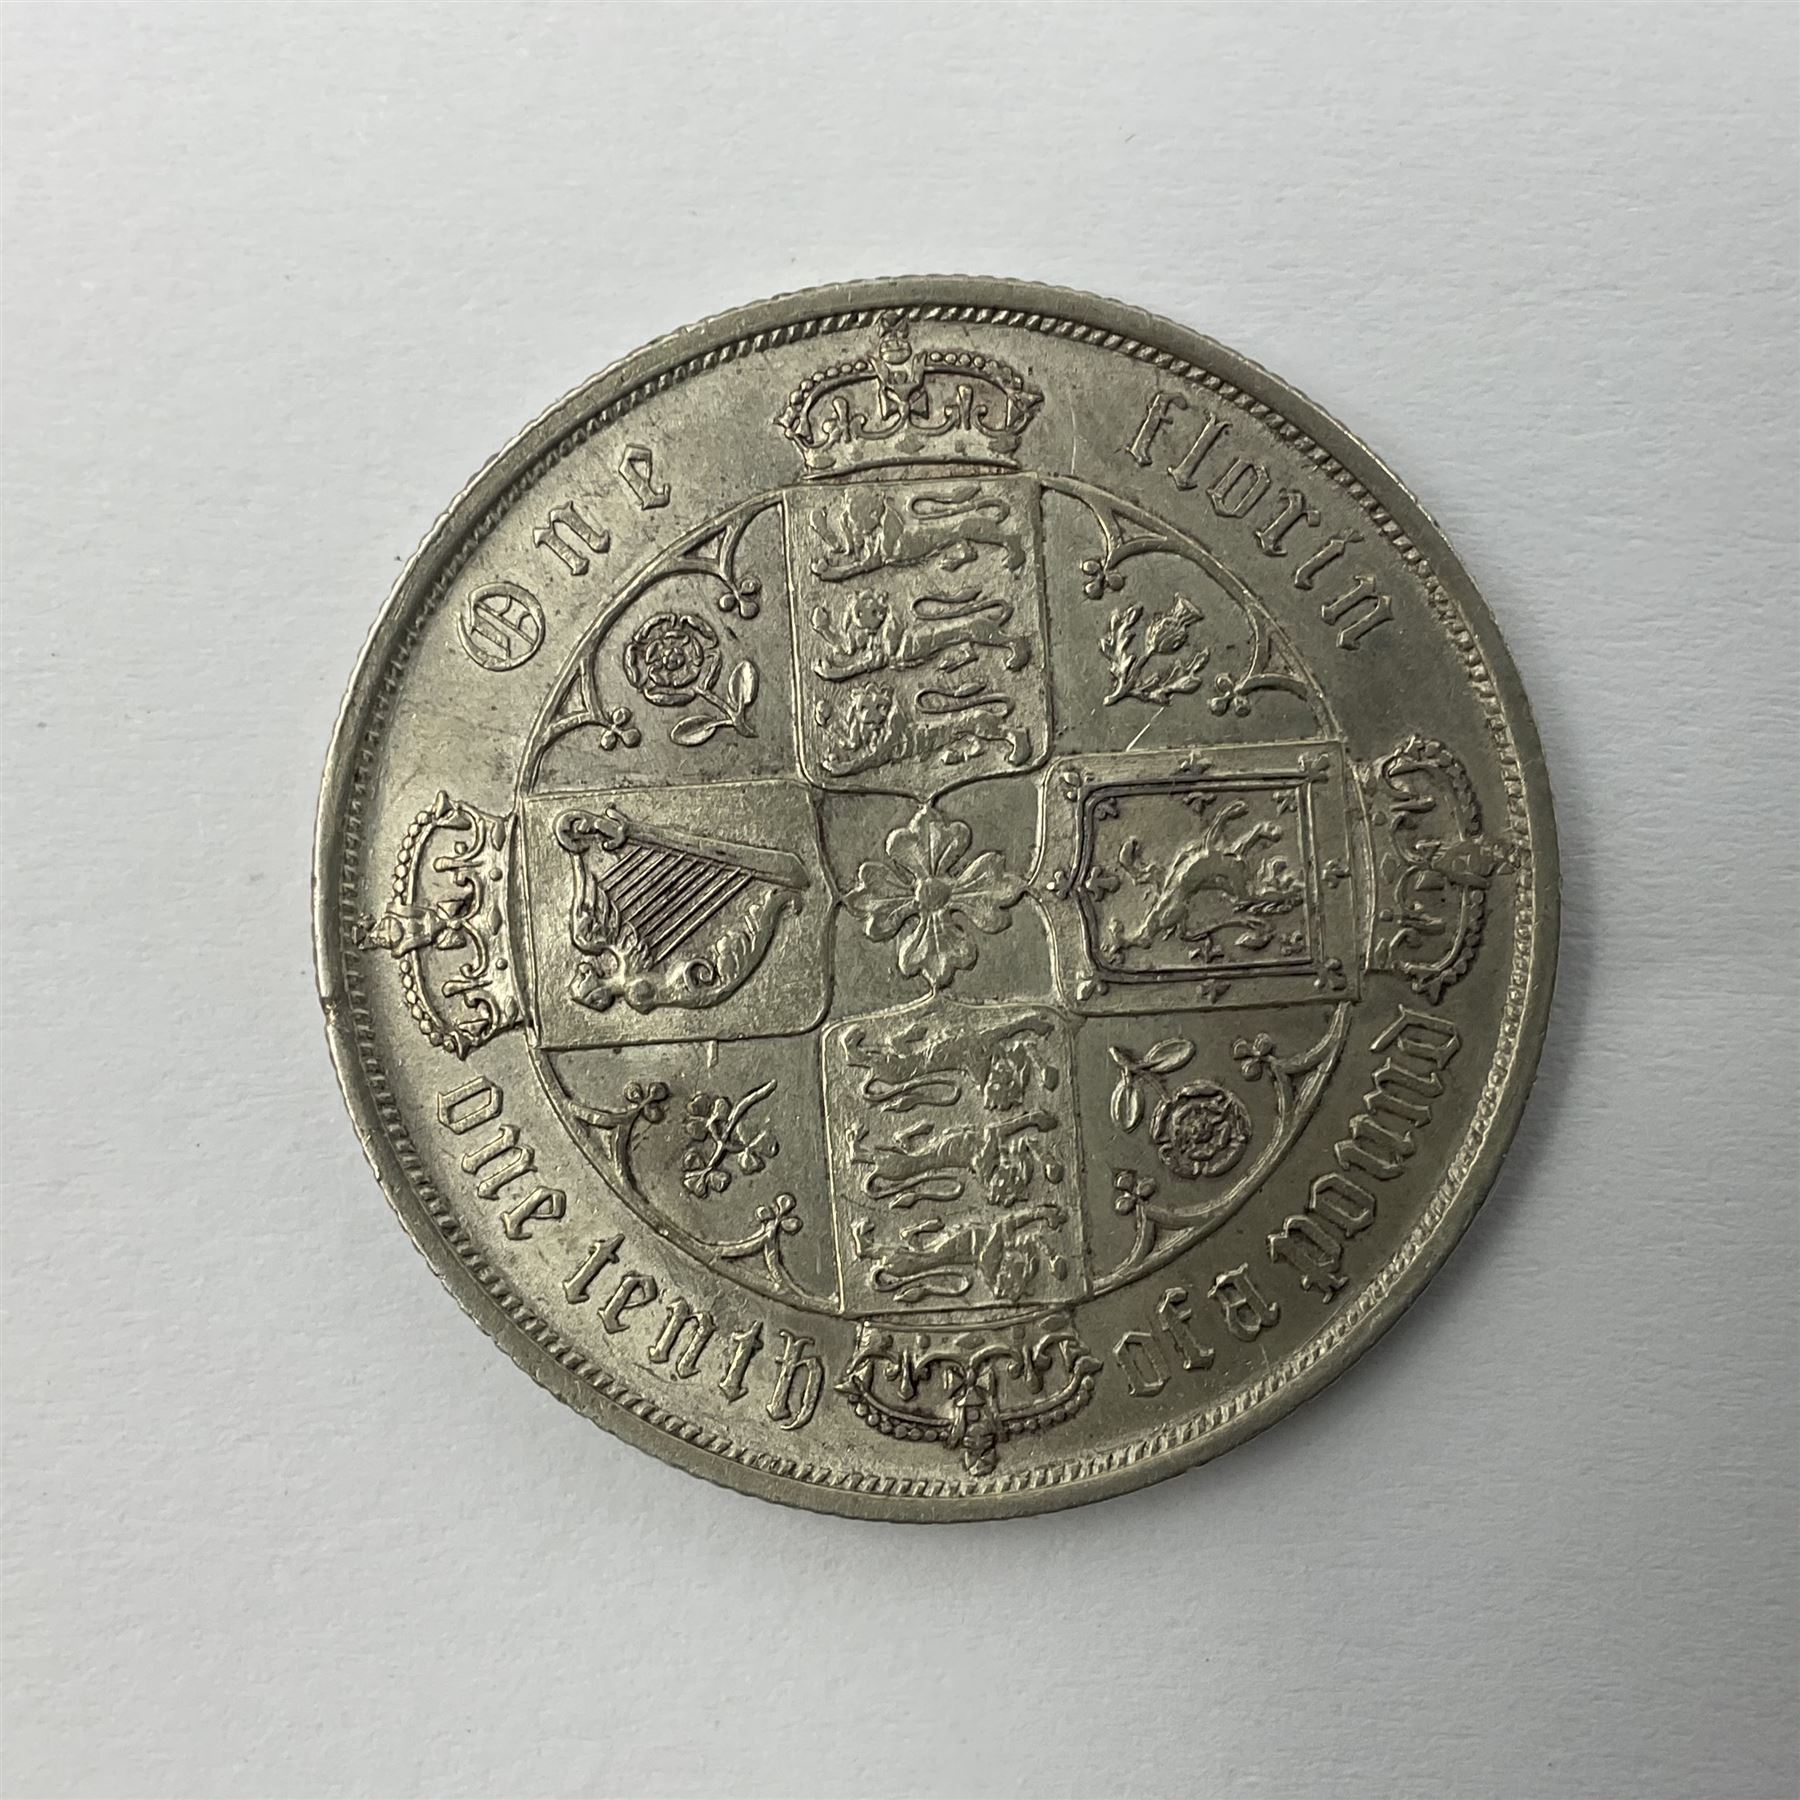 Queen Victoria 1887 silver 'gothic' florin coin - Image 3 of 3